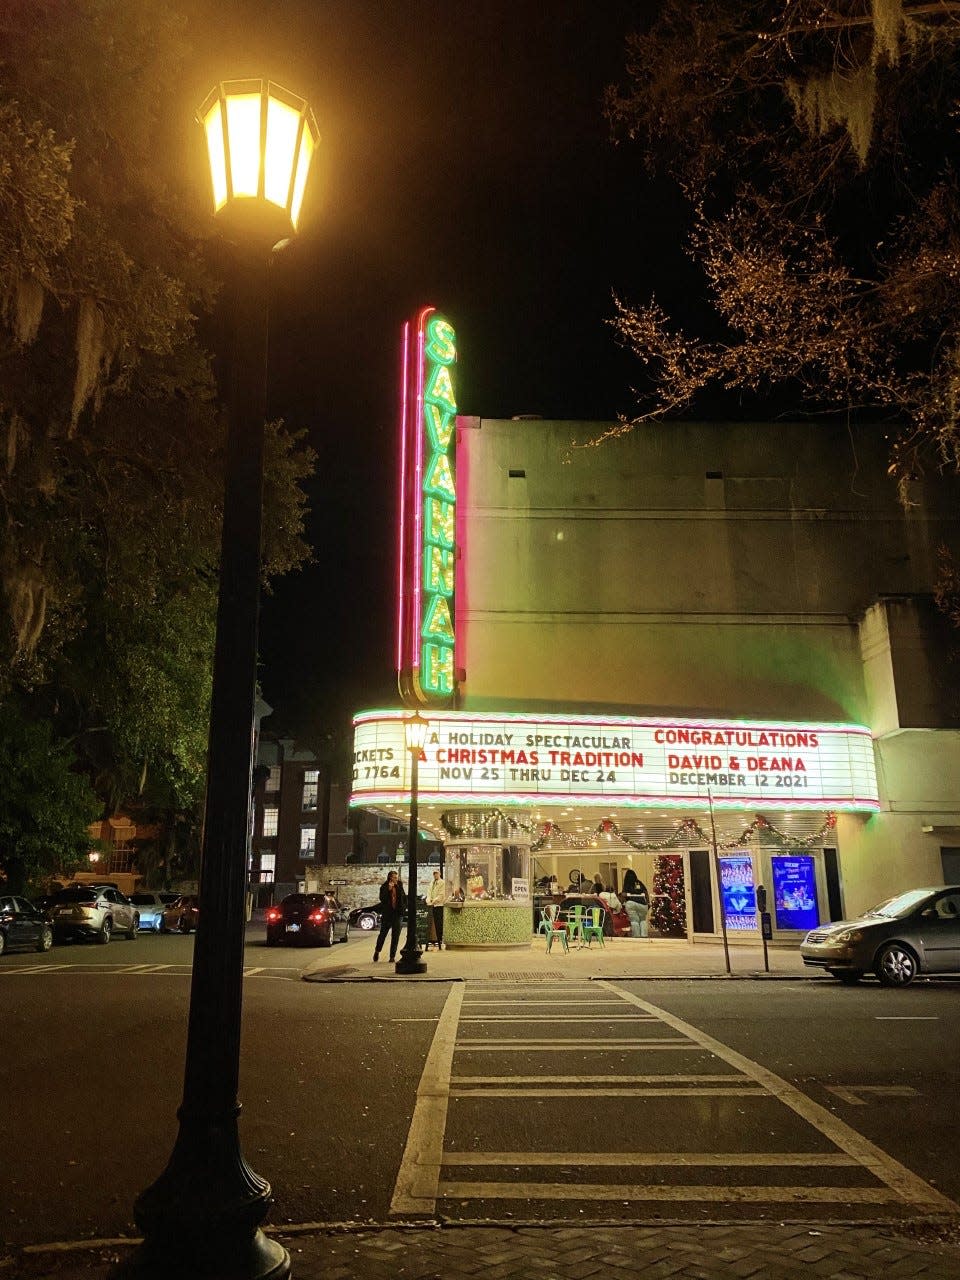 The Savannah Theatre, located at 222 Bull Street.